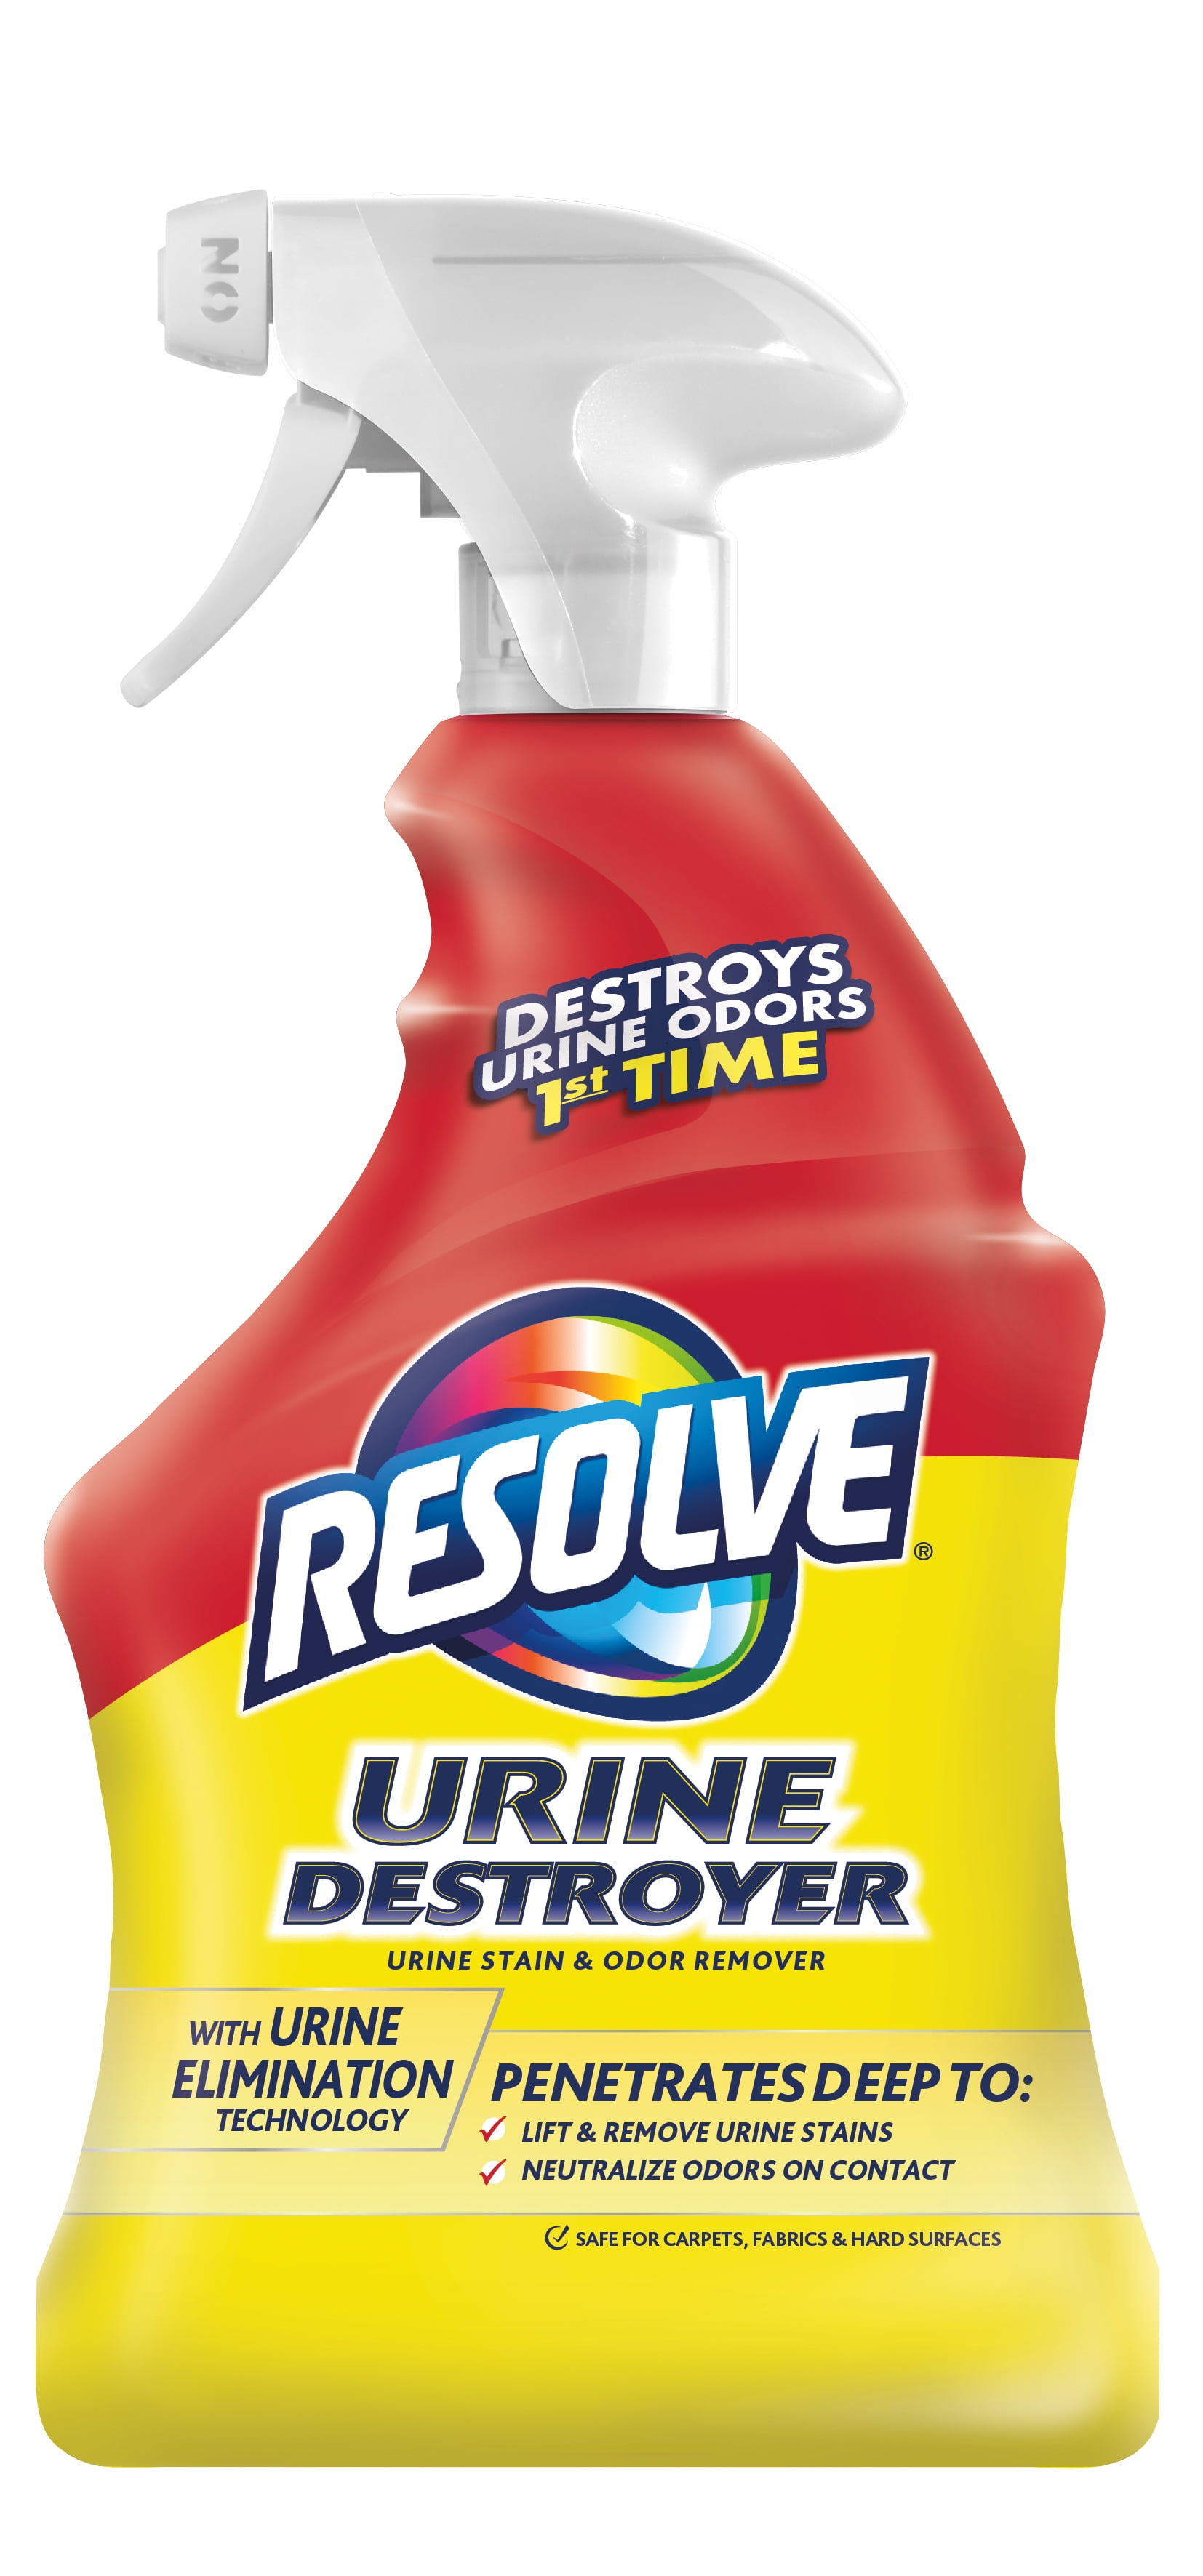 Pet Urine Stain And Odor Remover Spray, Best Hardwood Floor Cleaner For Pet Urine